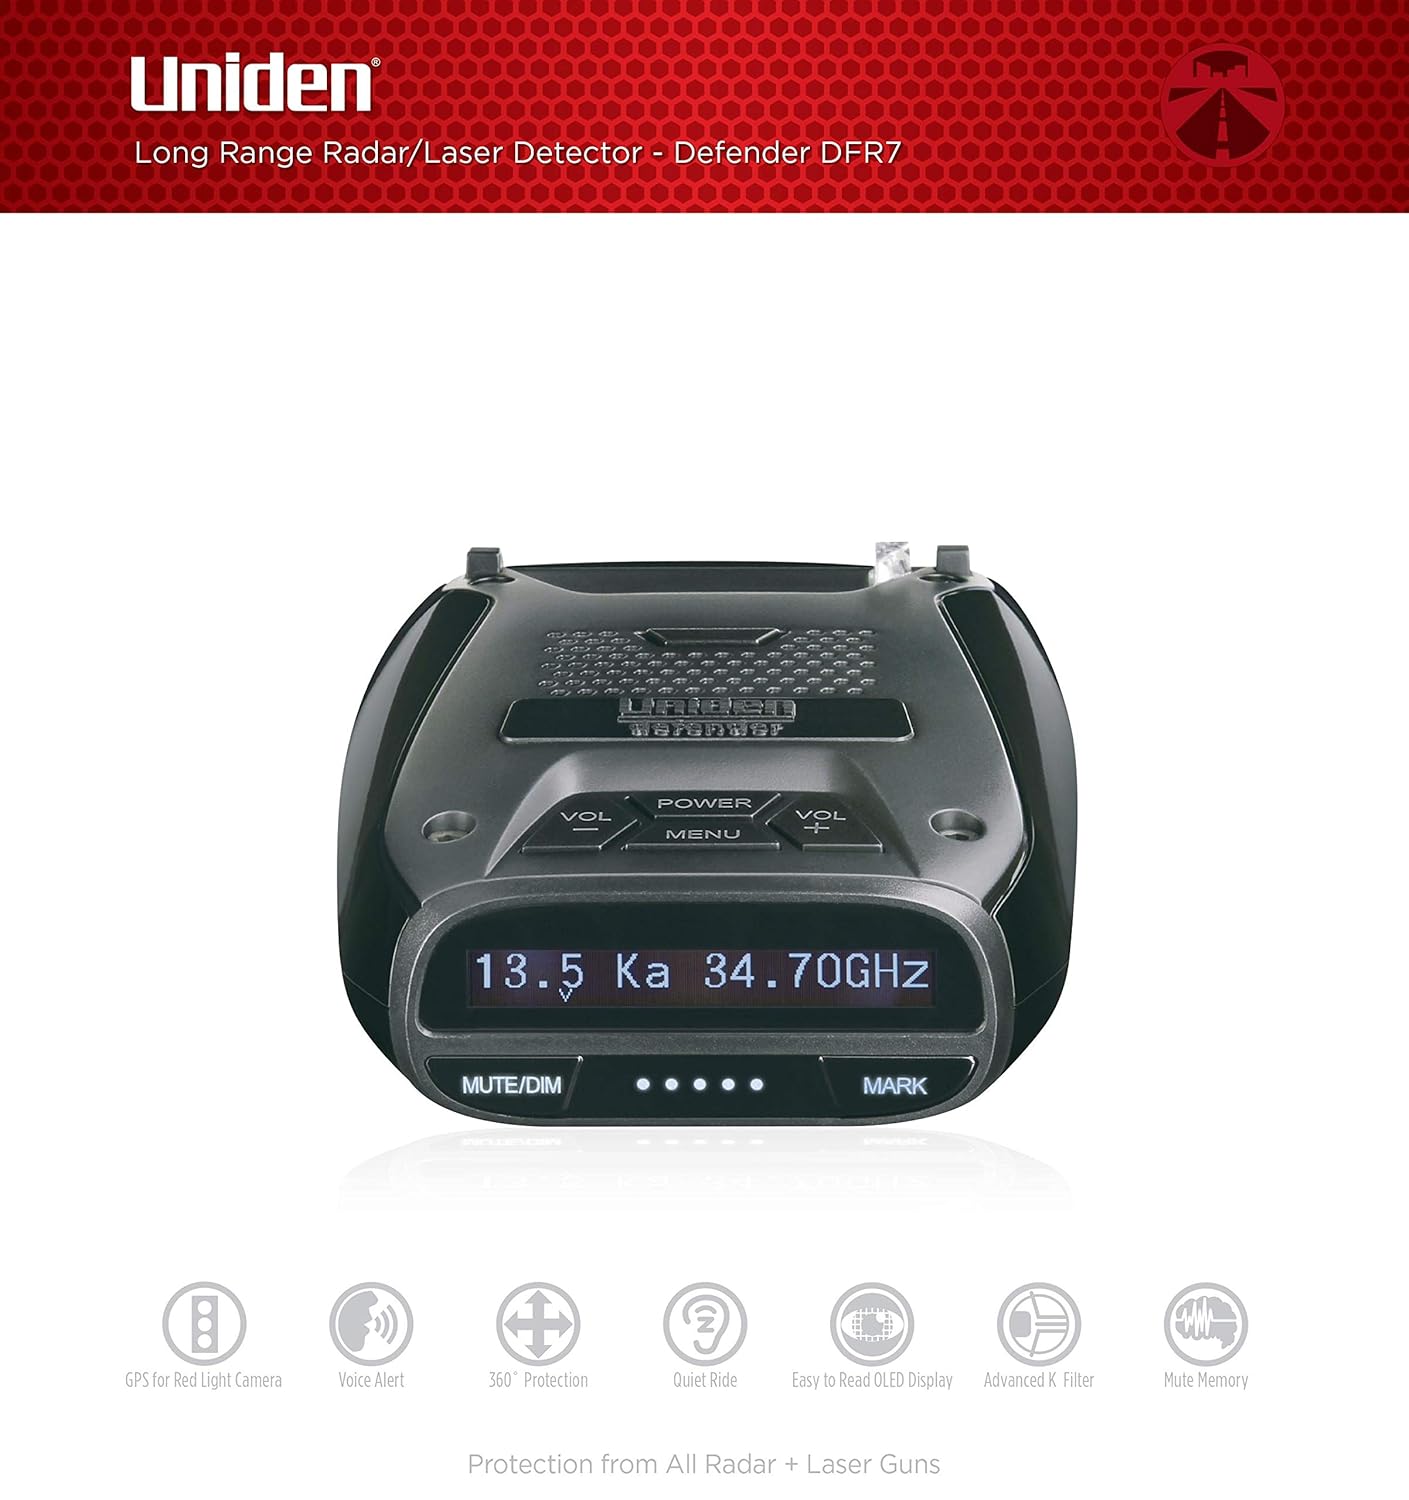 UNIDEN DFR7 DFR7 Ultraperformance Super-Long-Range Laser/Radar Detector with Built-in GPS